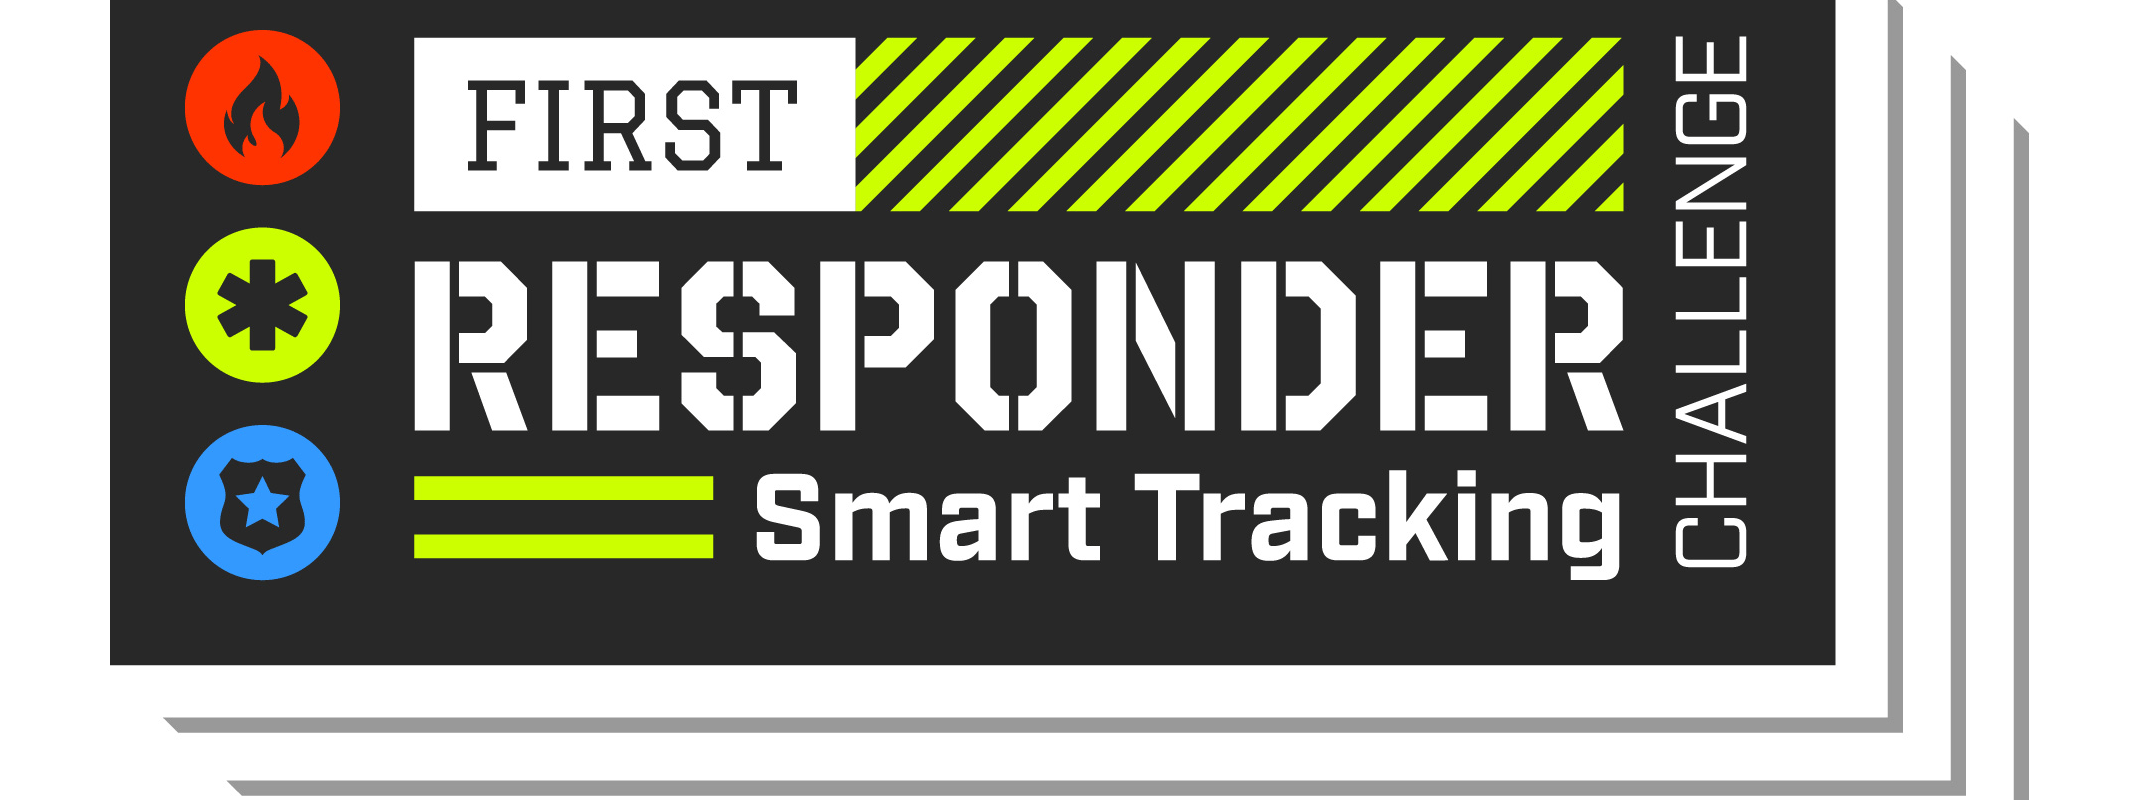 First Responder Smart Tracking Challenge